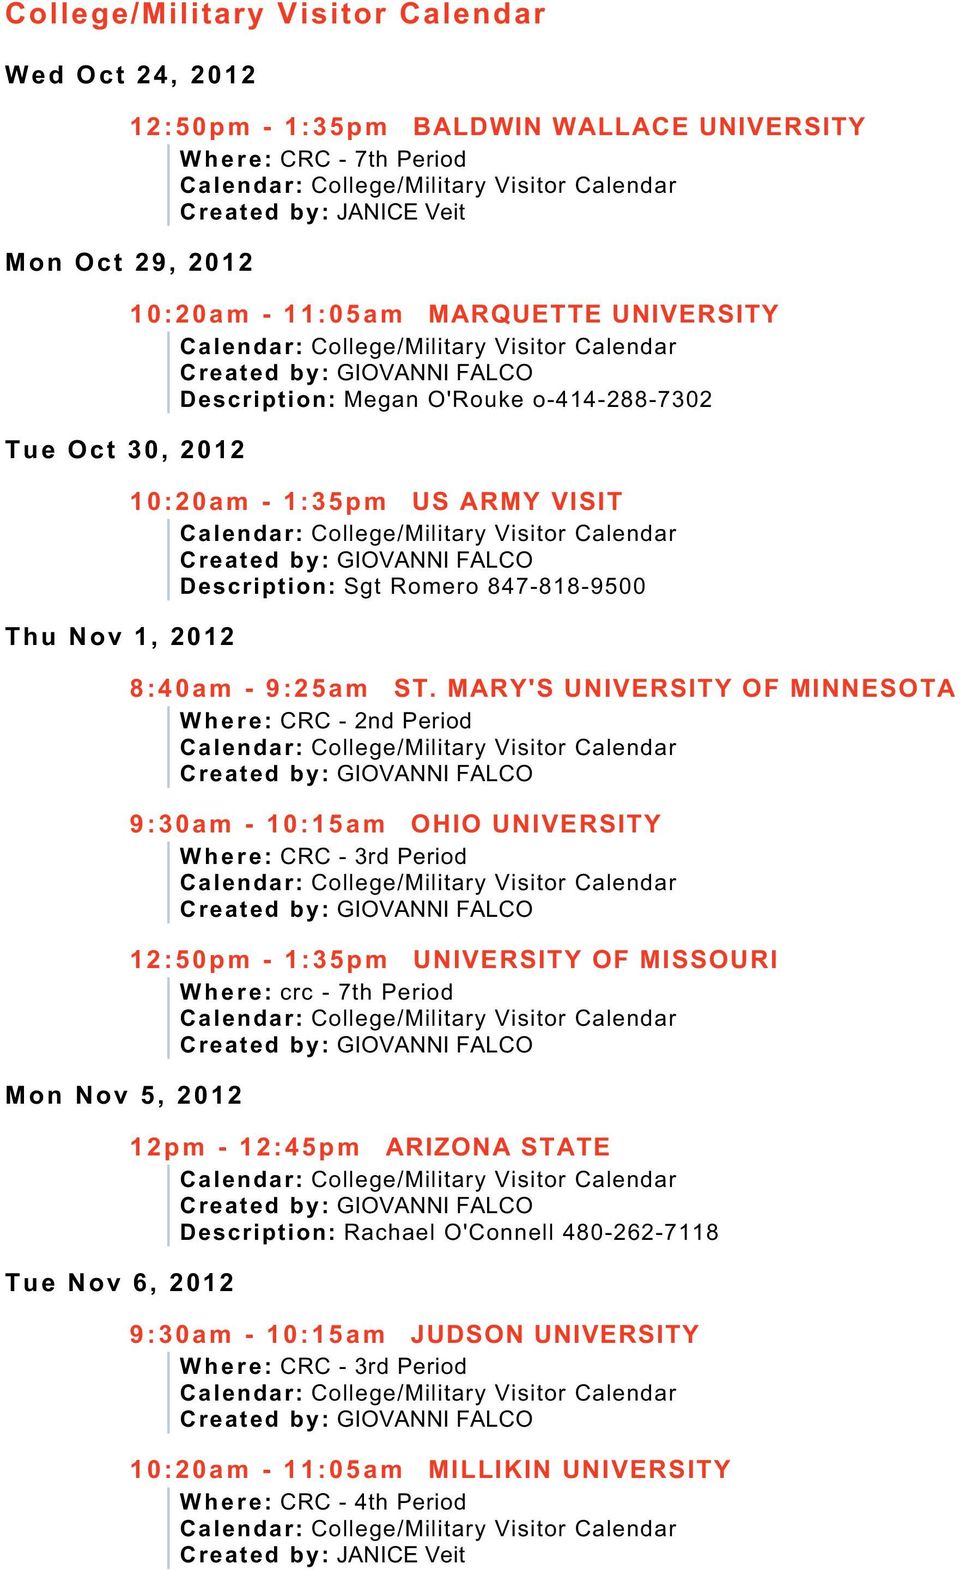 College Military Visitor Calendar Pdf Free Download